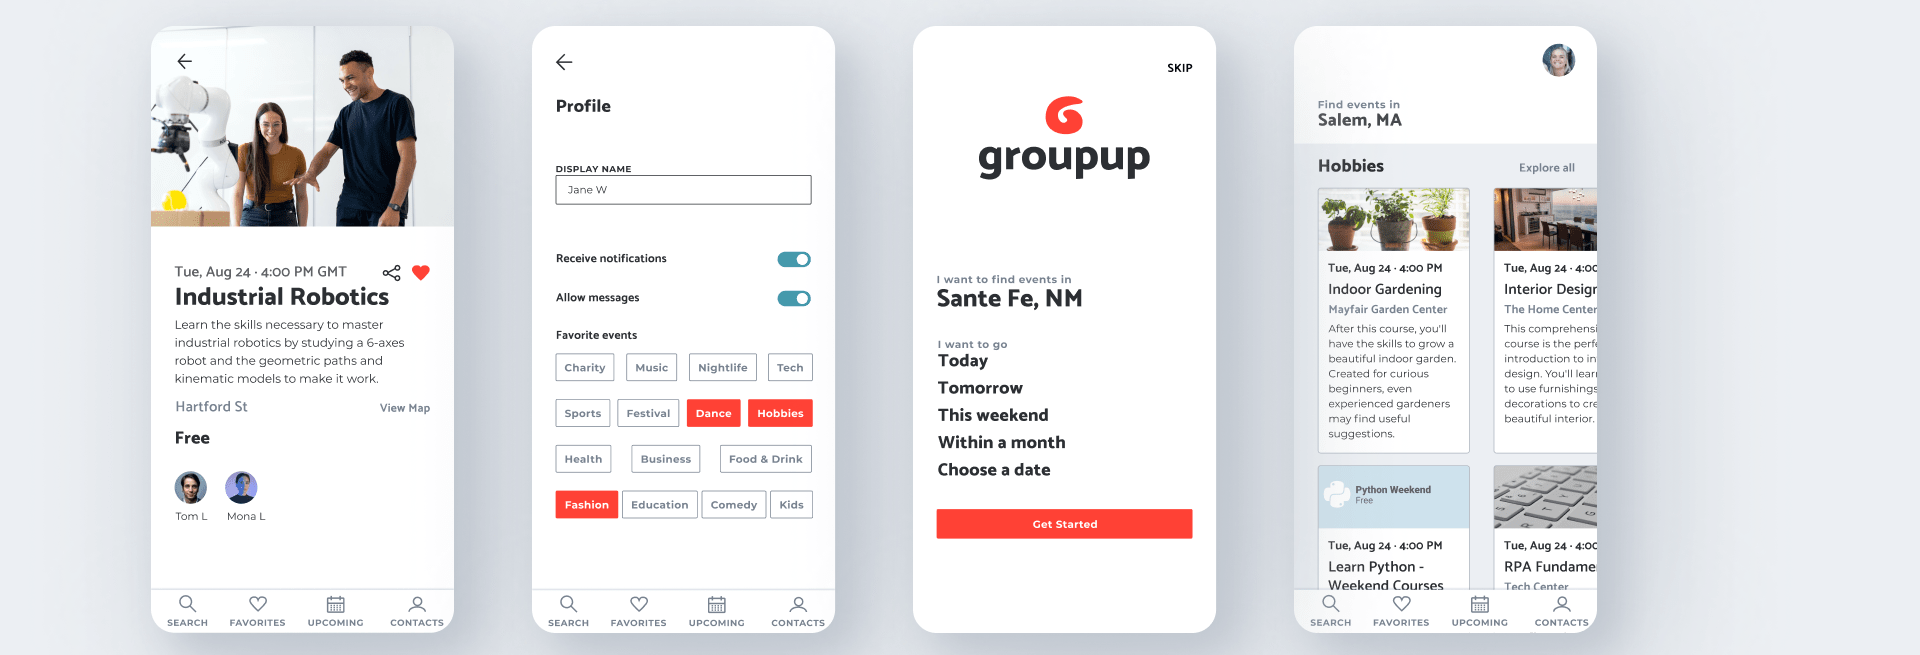 Groupup mobile and desktop screens